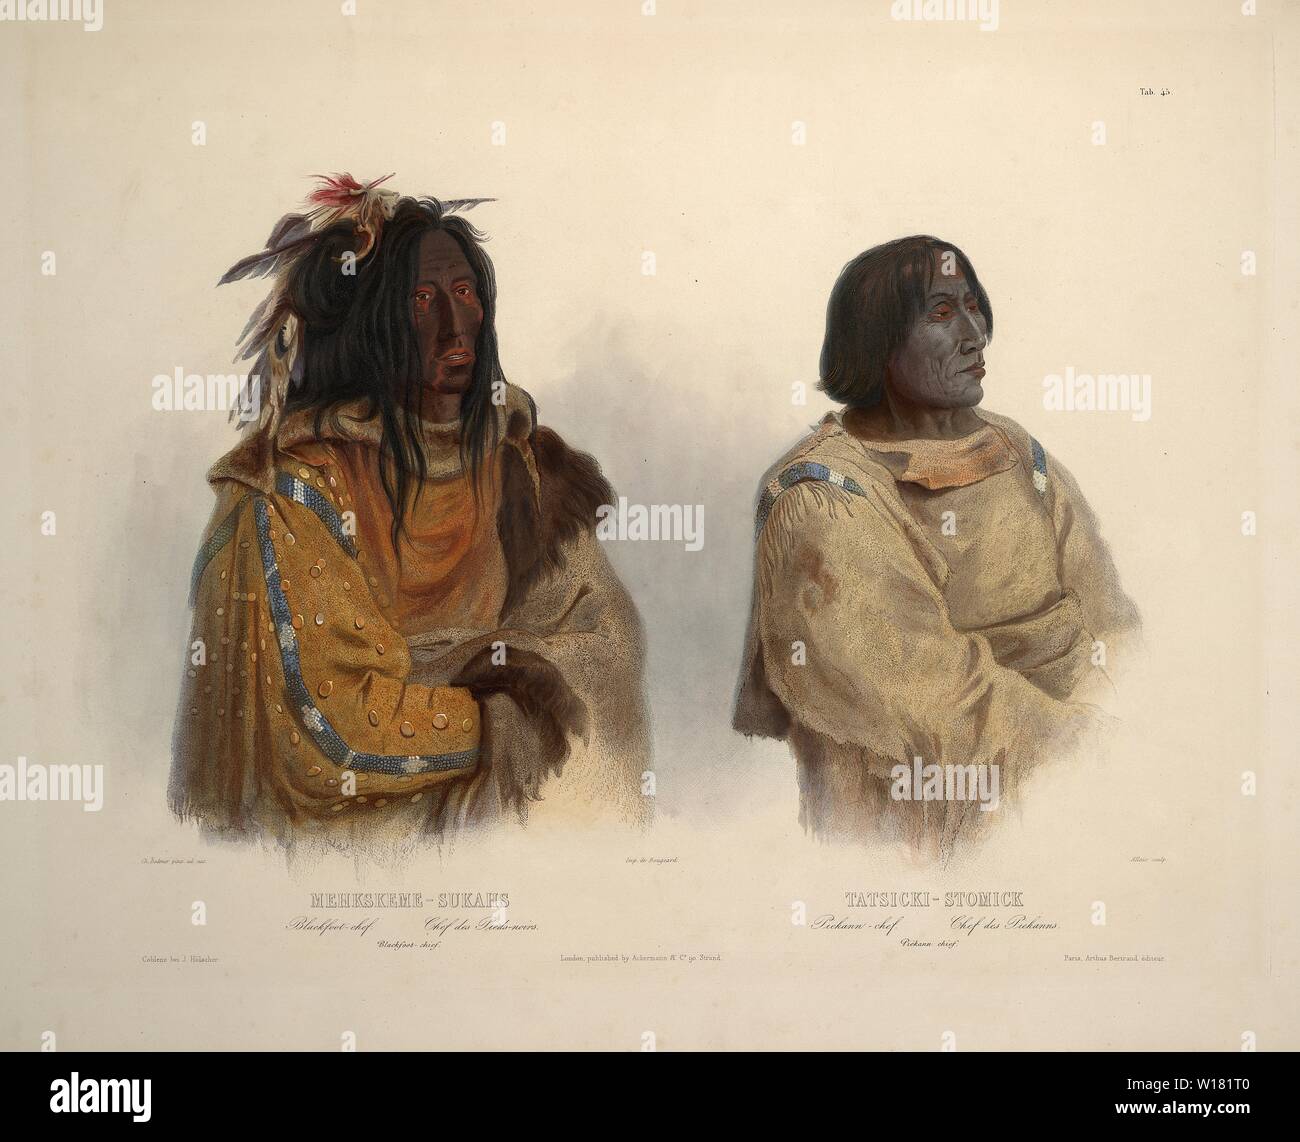 Mehkskeme-Sukahs, Blackfoot-chief; Tatsicki-Stomick, Pickann chief - Karl Bodmer aquatint from Travels in the Interior of North America Stock Photo